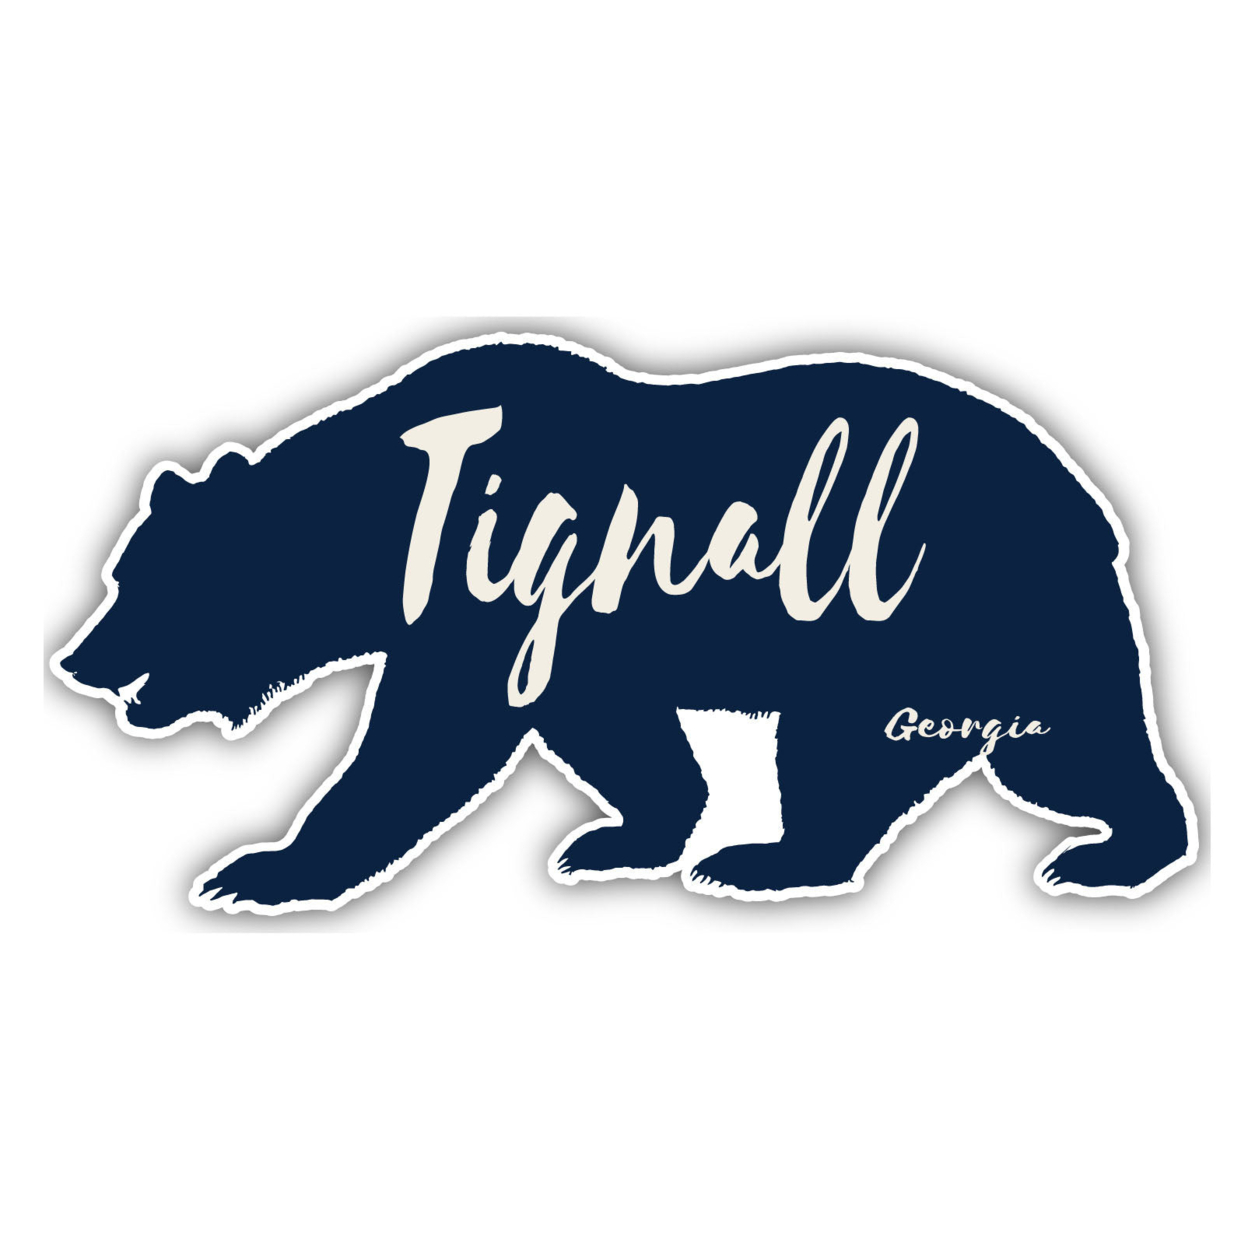 Tignall Georgia Souvenir Decorative Stickers (Choose Theme And Size) - Single Unit, 4-Inch, Bear